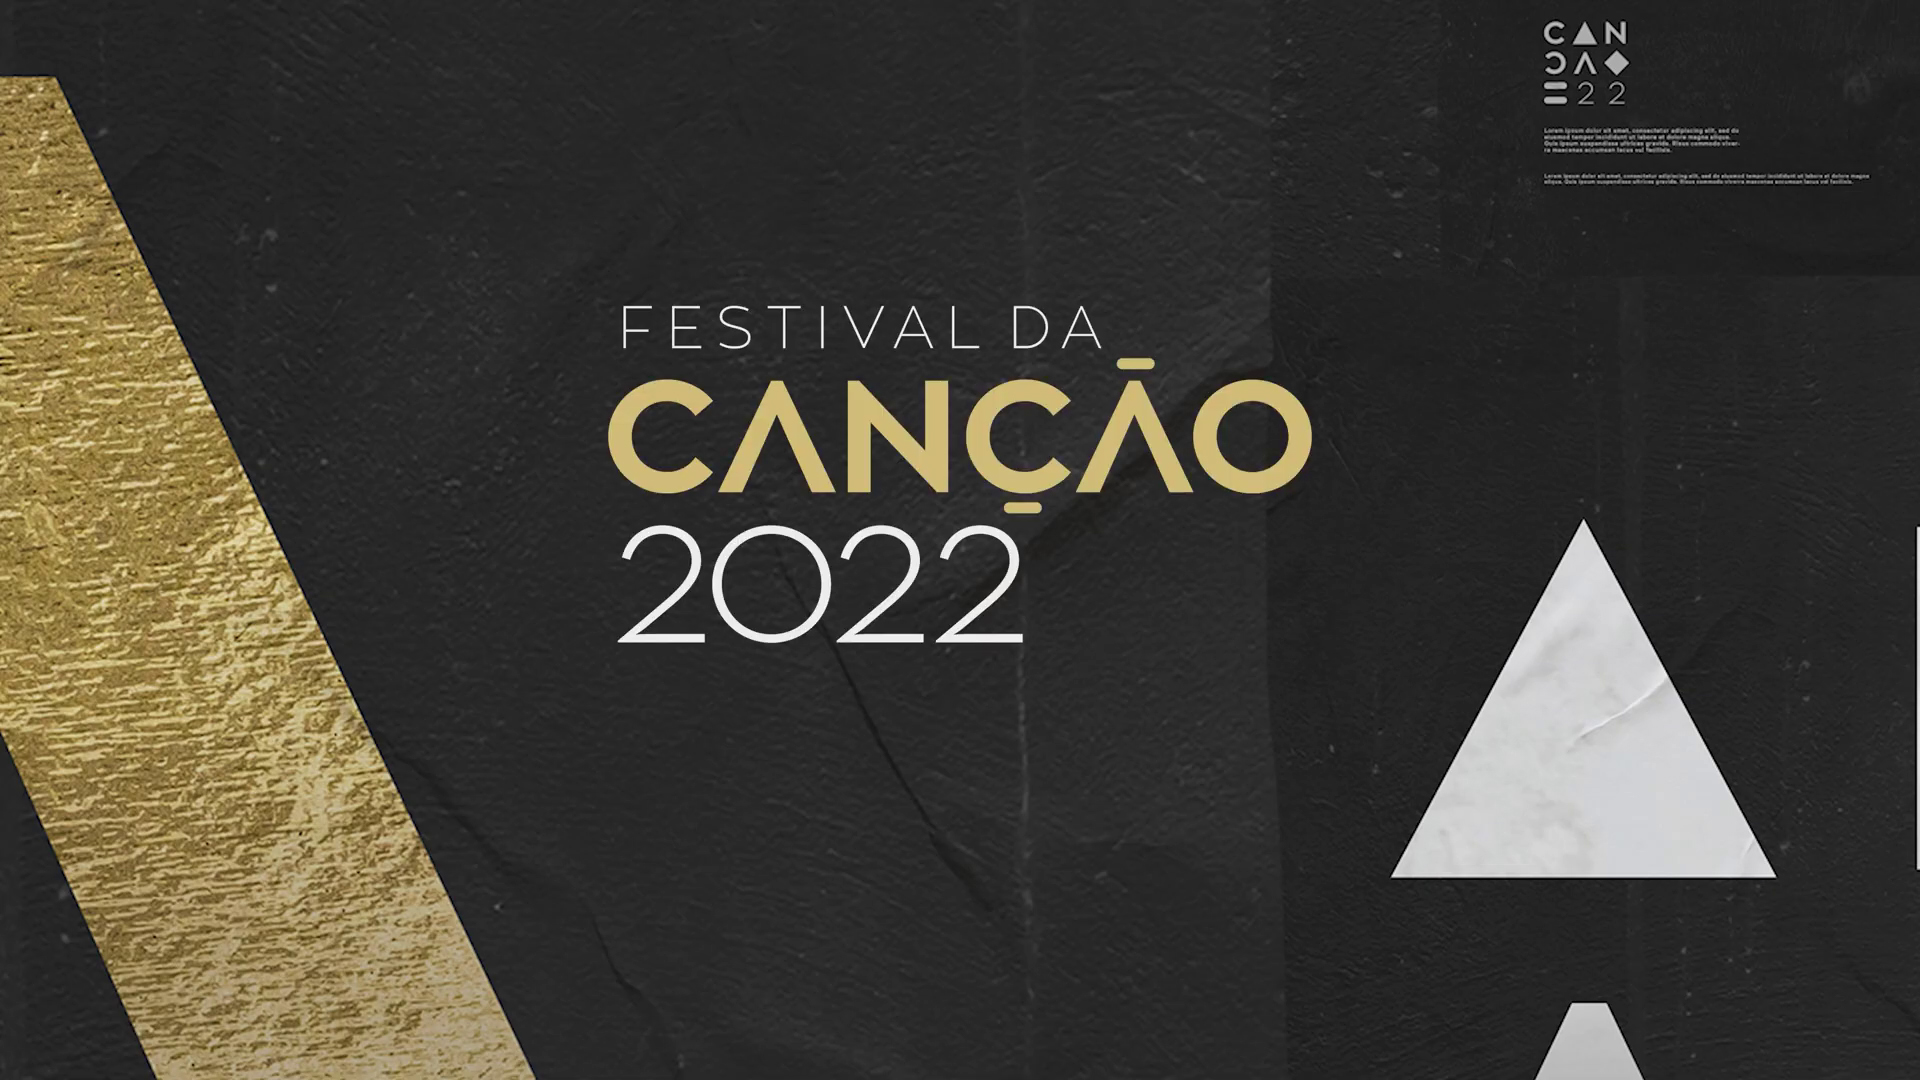 Desvelado el orden de actuación del Festival da Canção 2022